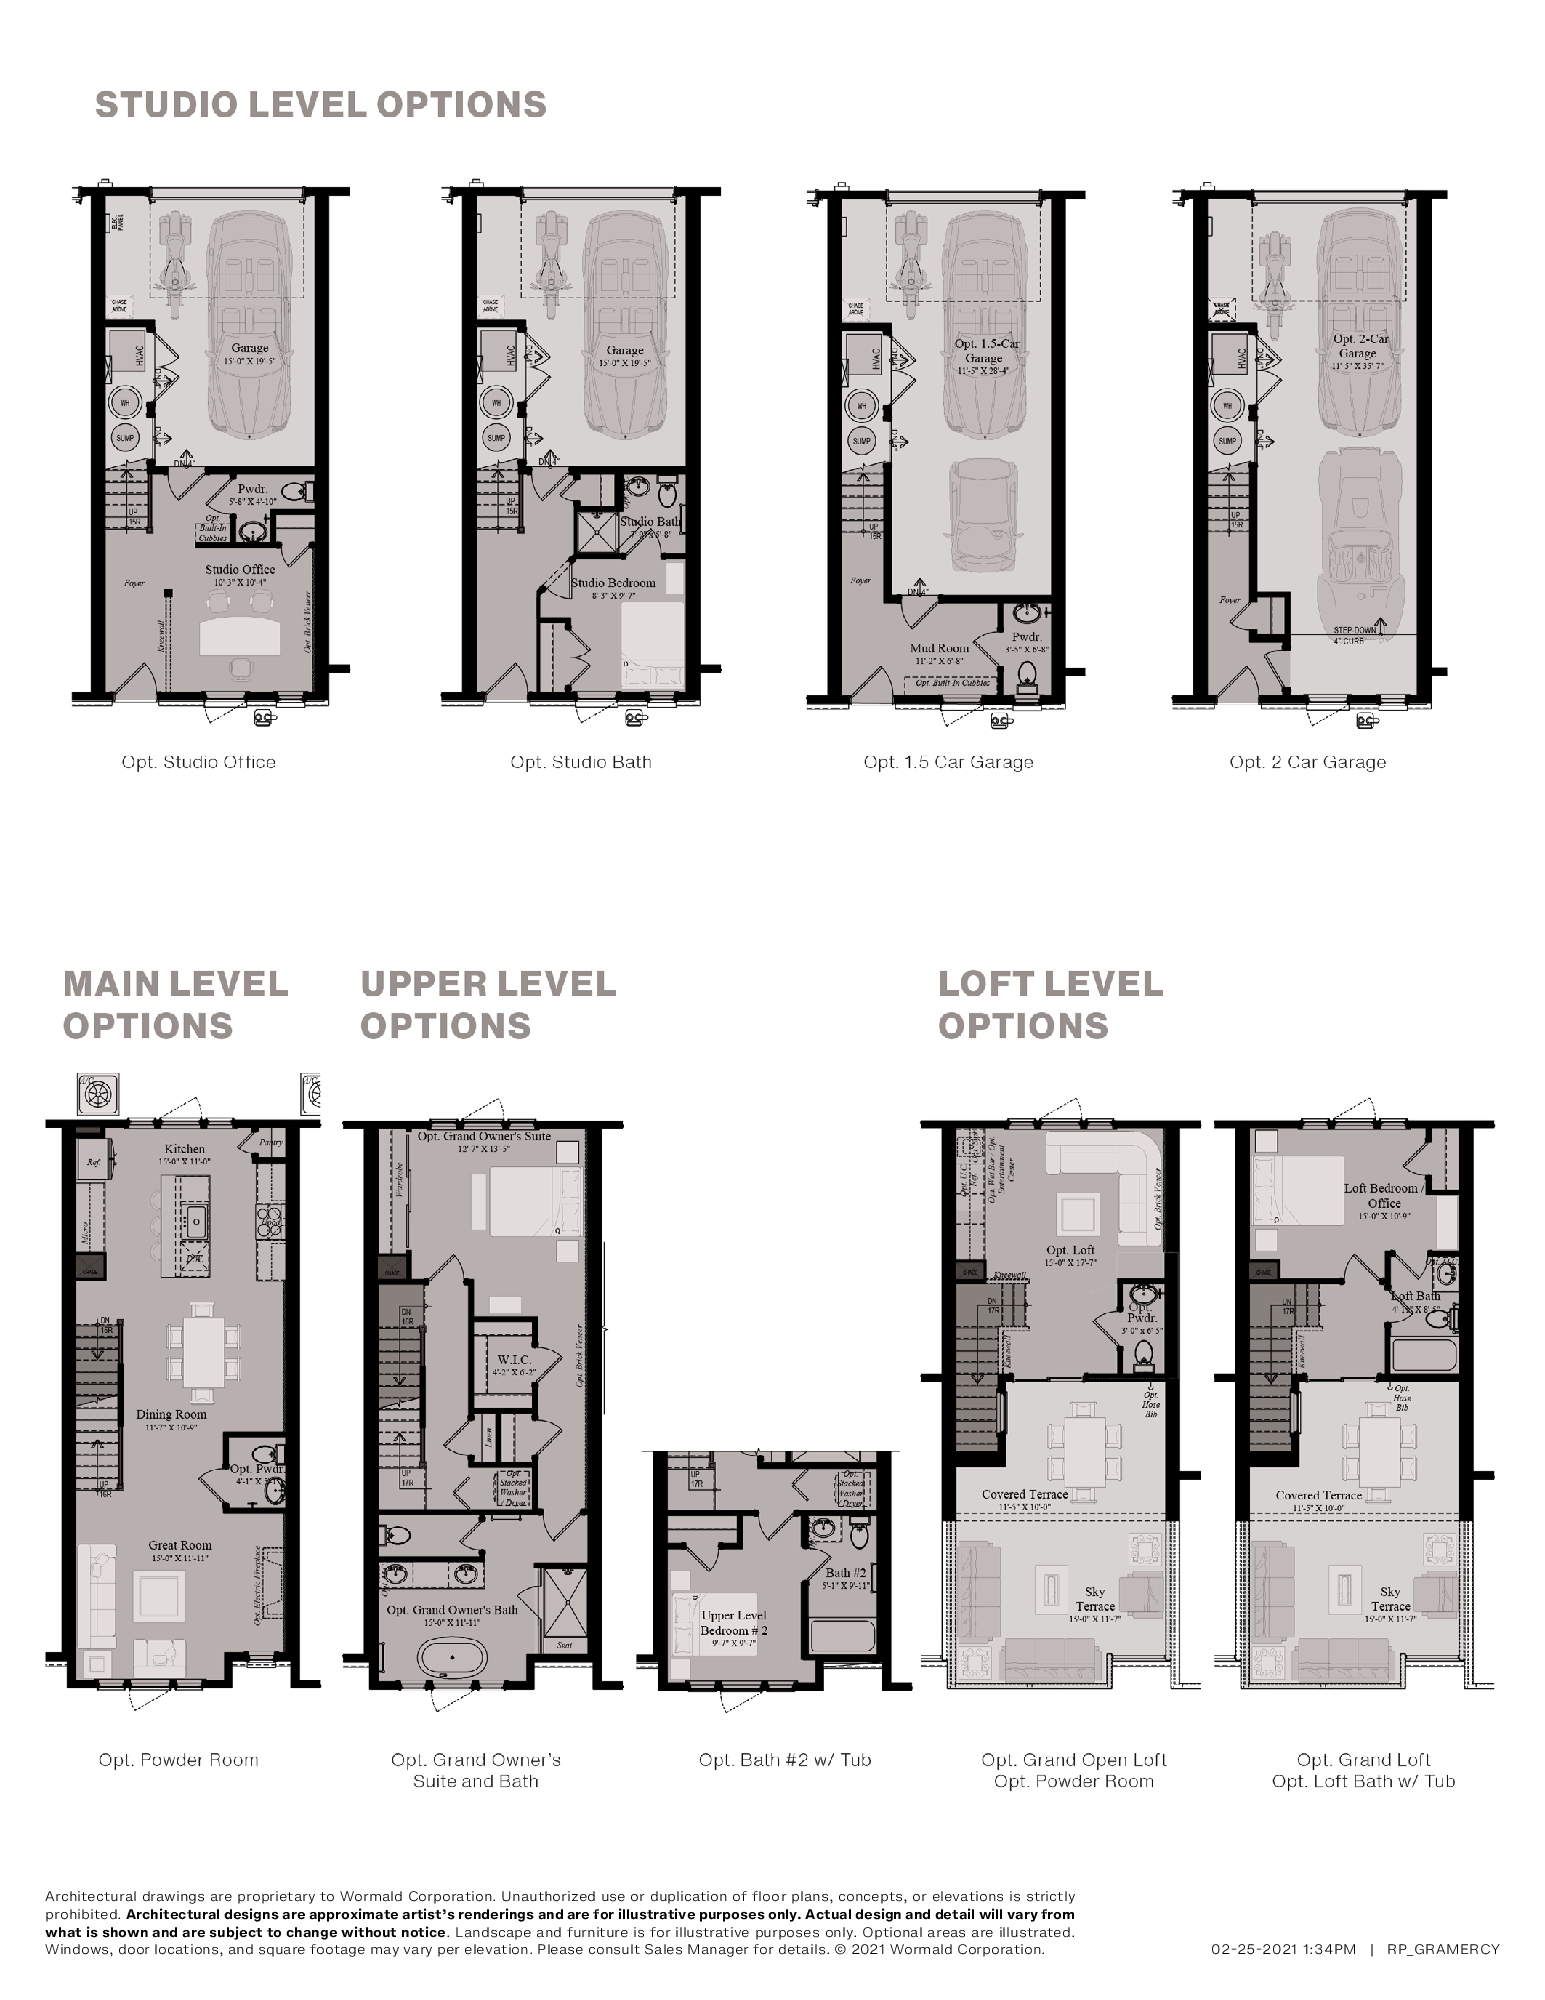 The Gramercy floor plan 2